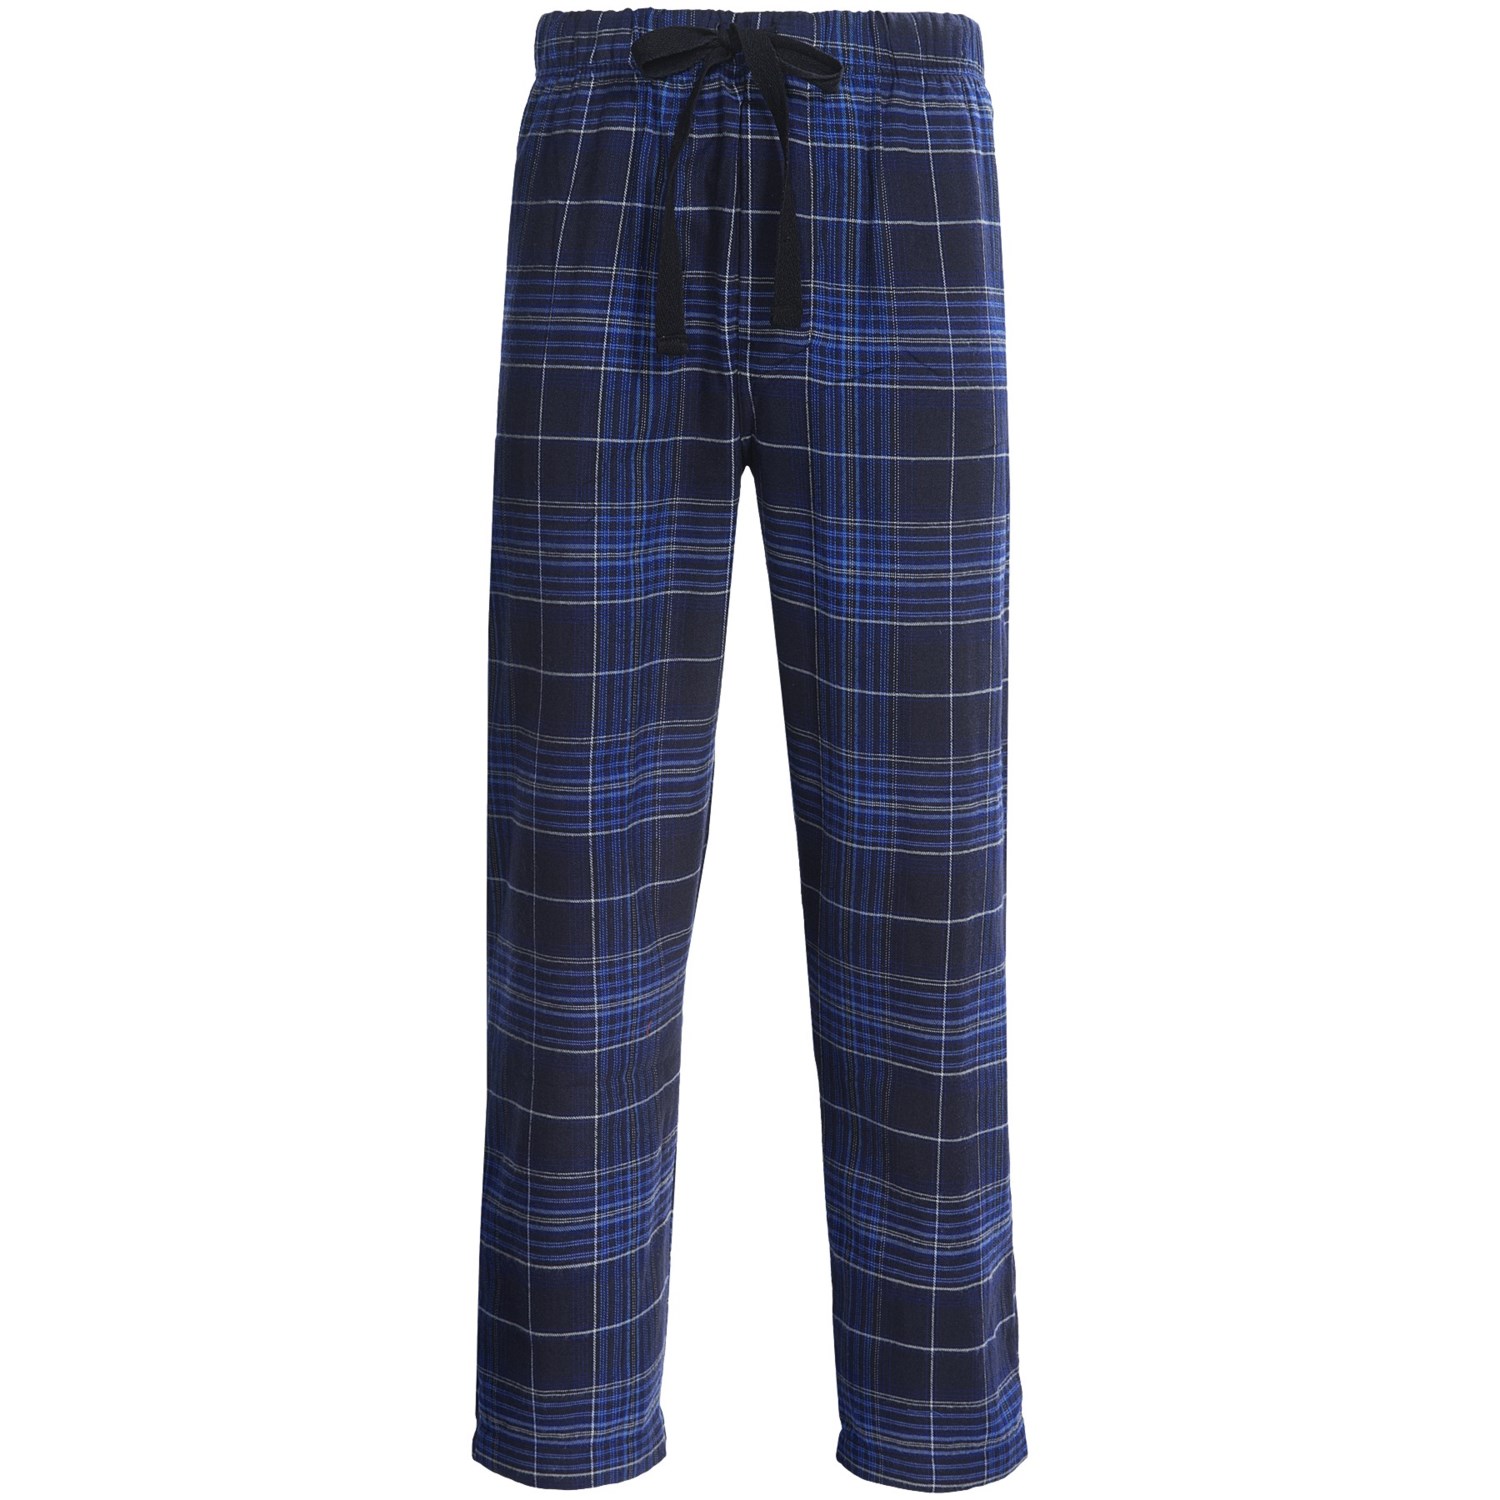 Cold Storage Flannel Pajama Bottoms (For Men) 6859J - Save 56%